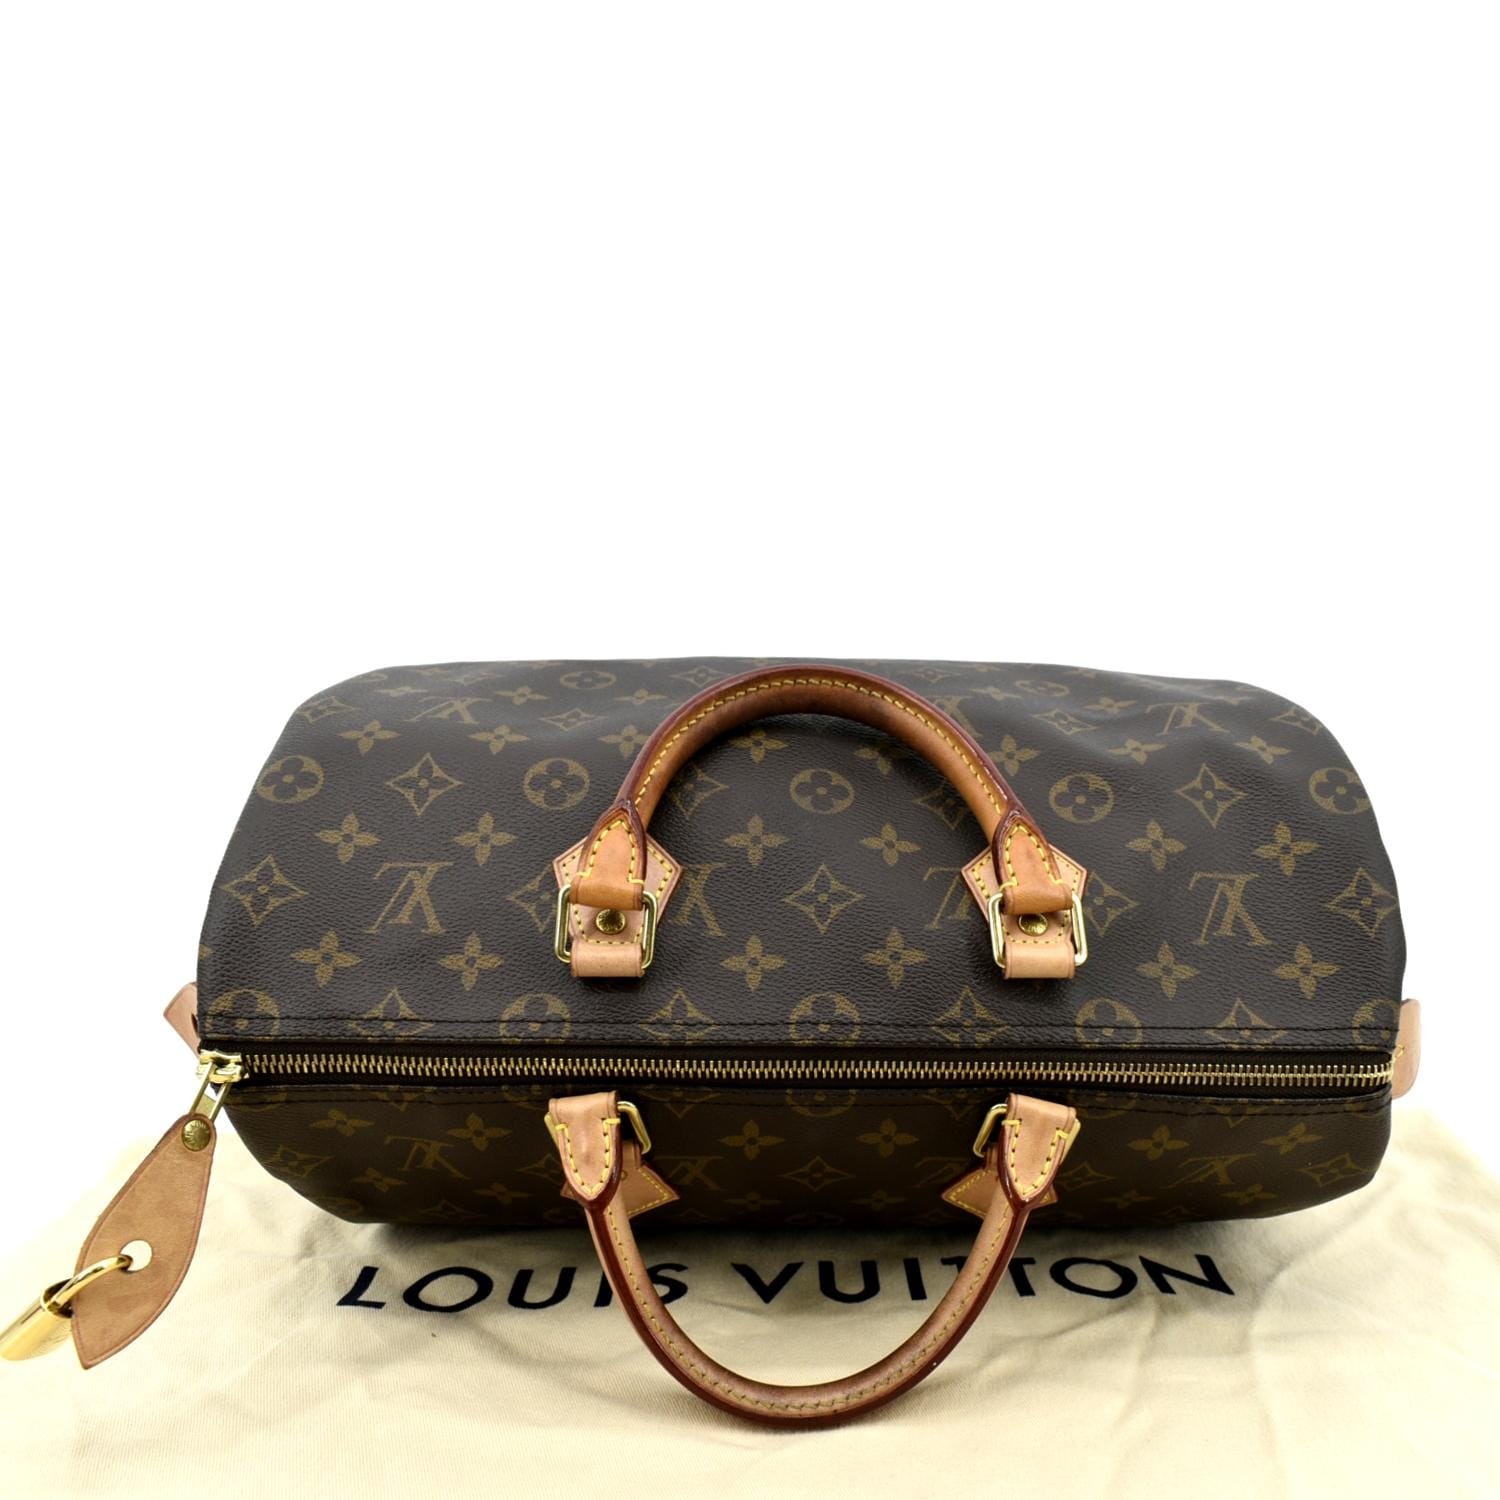 Our Preloved Authentic Louis Vuitton Monogram Speedy 30 Hand Bag avail, handbag